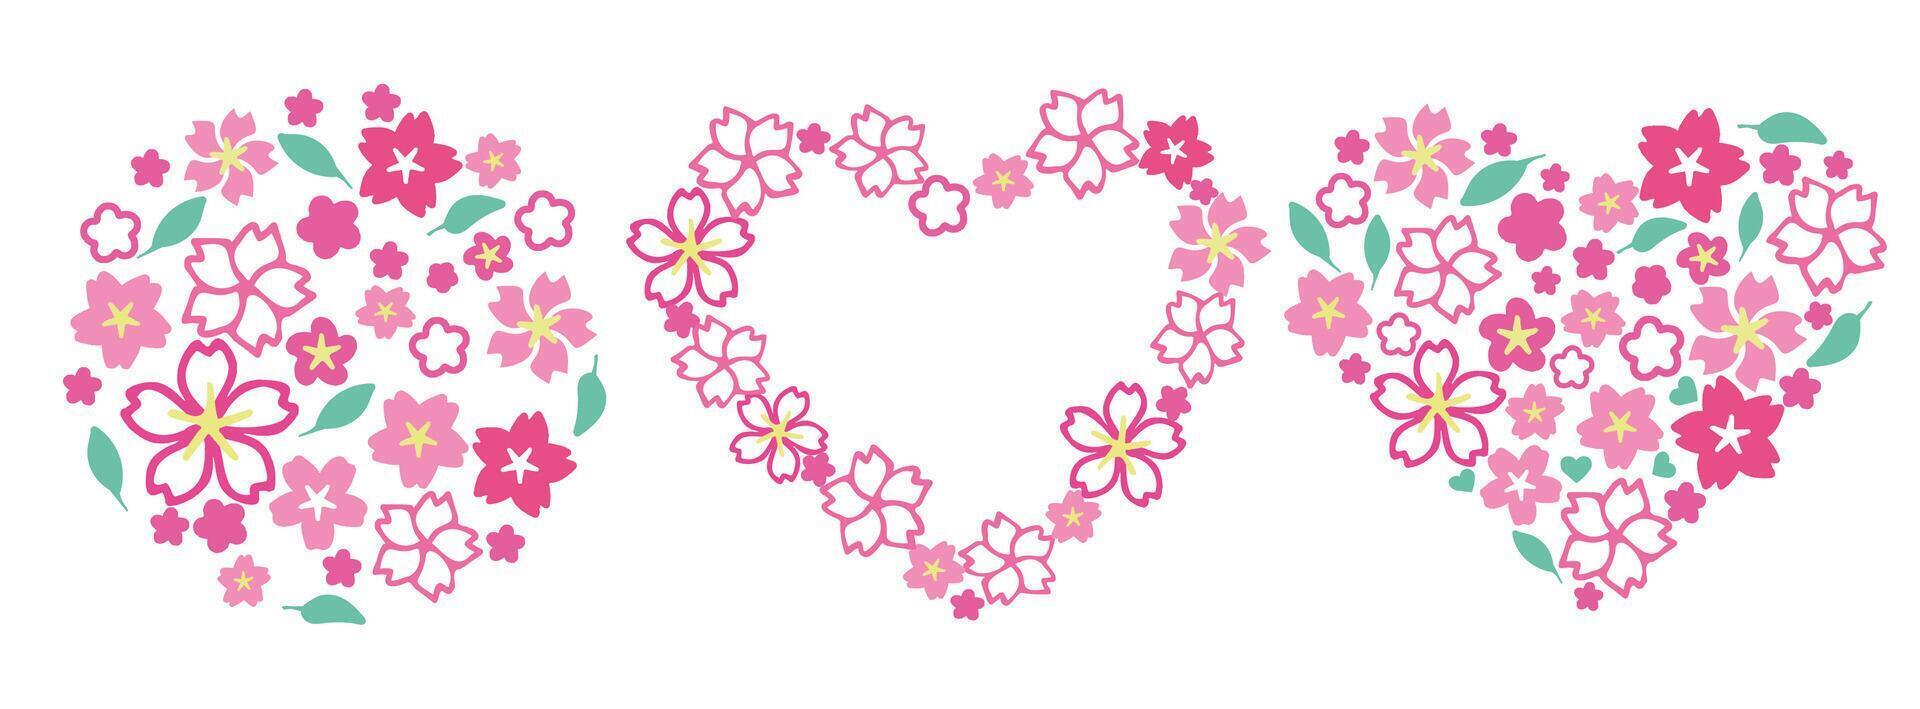 Sakura flower composition for card or invite.Spring design vector